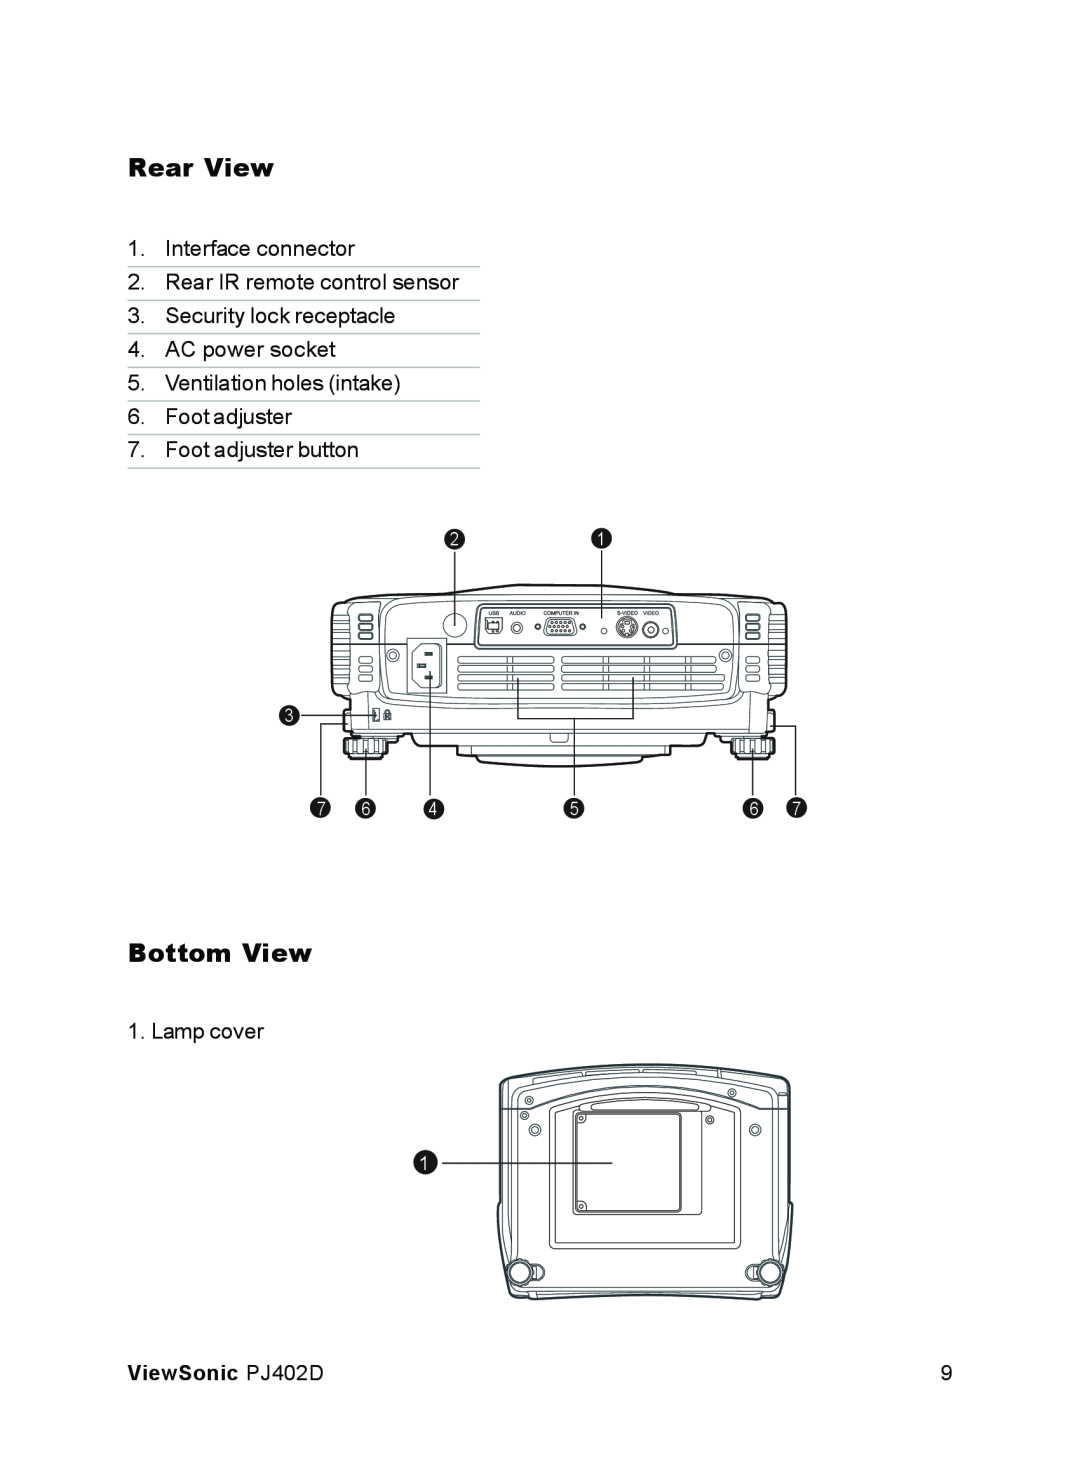 ViewSonic PJ402D manual Rear View, Bottom View, Interface connector 2. Rear IR remote control sensor, Lamp cover 